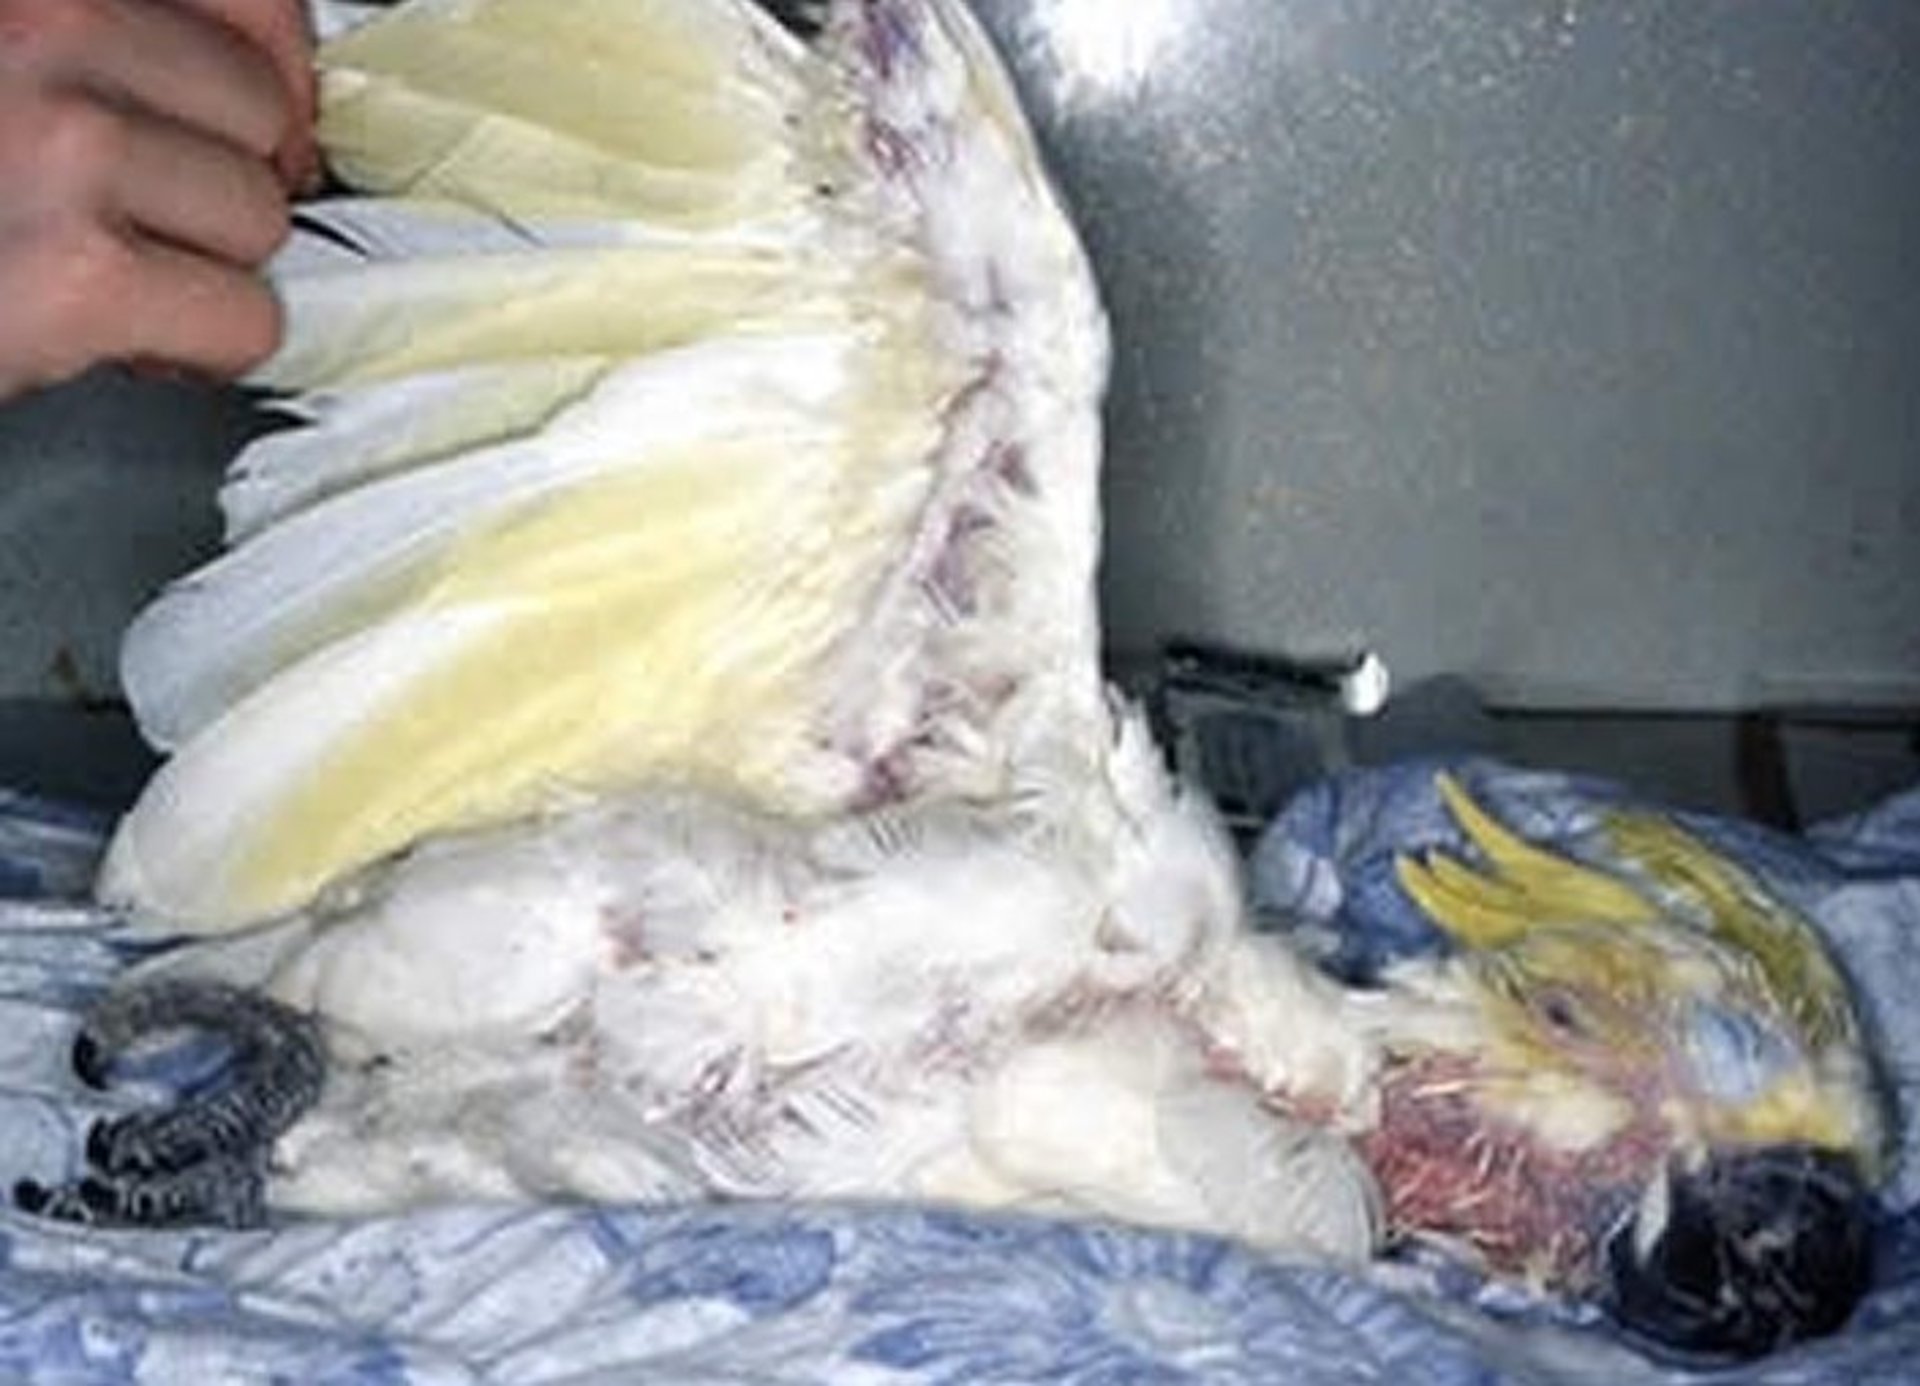 Psittacine beak and feather disease, cockatoo